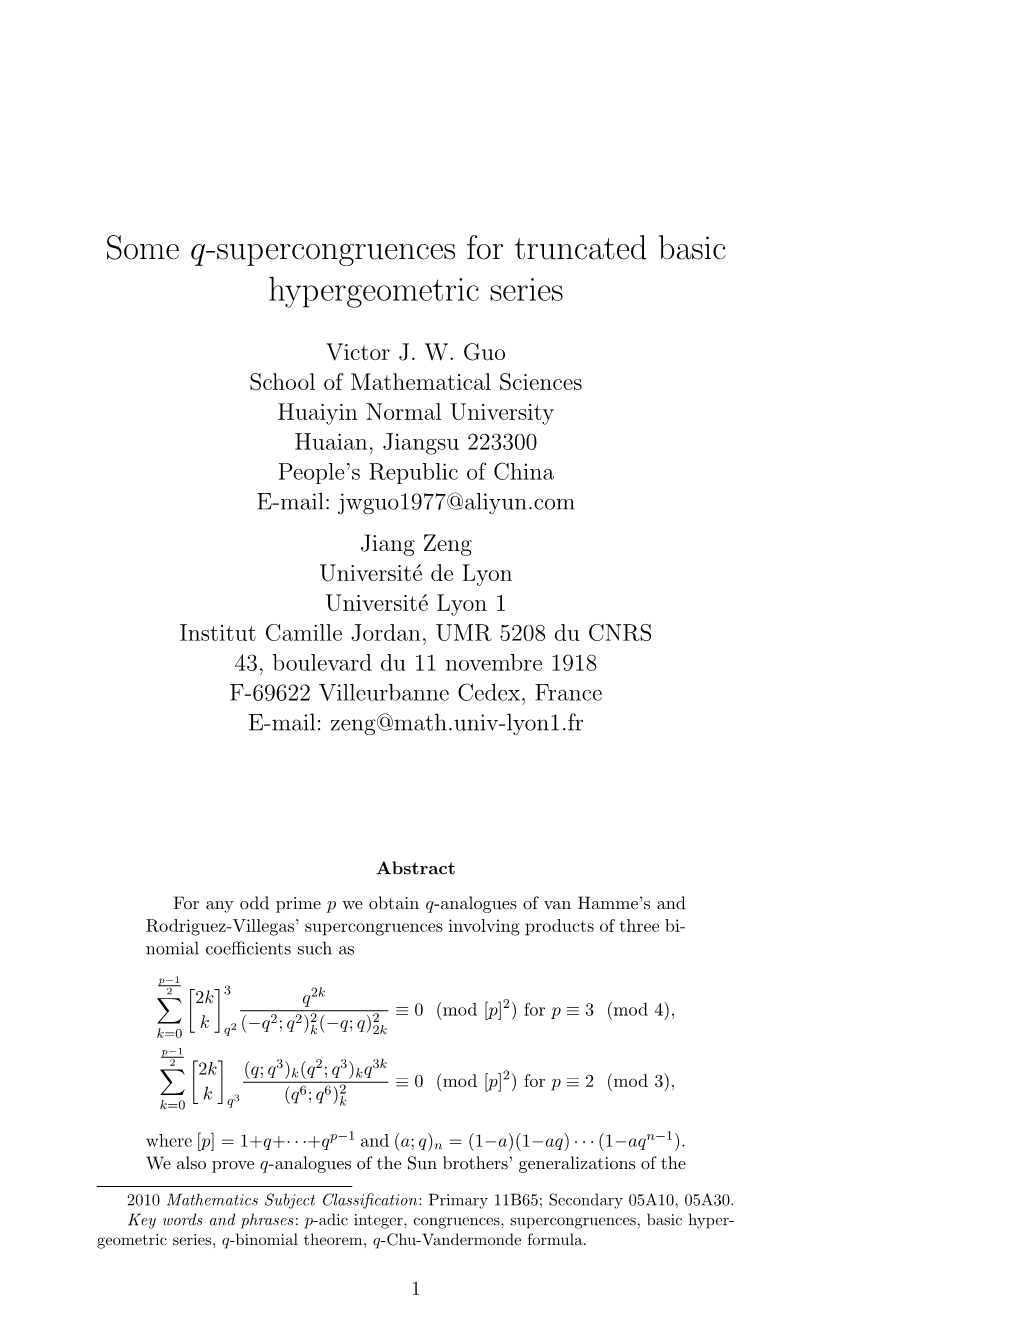 Some Q-Supercongruences for Truncated Basic Hypergeometric Series